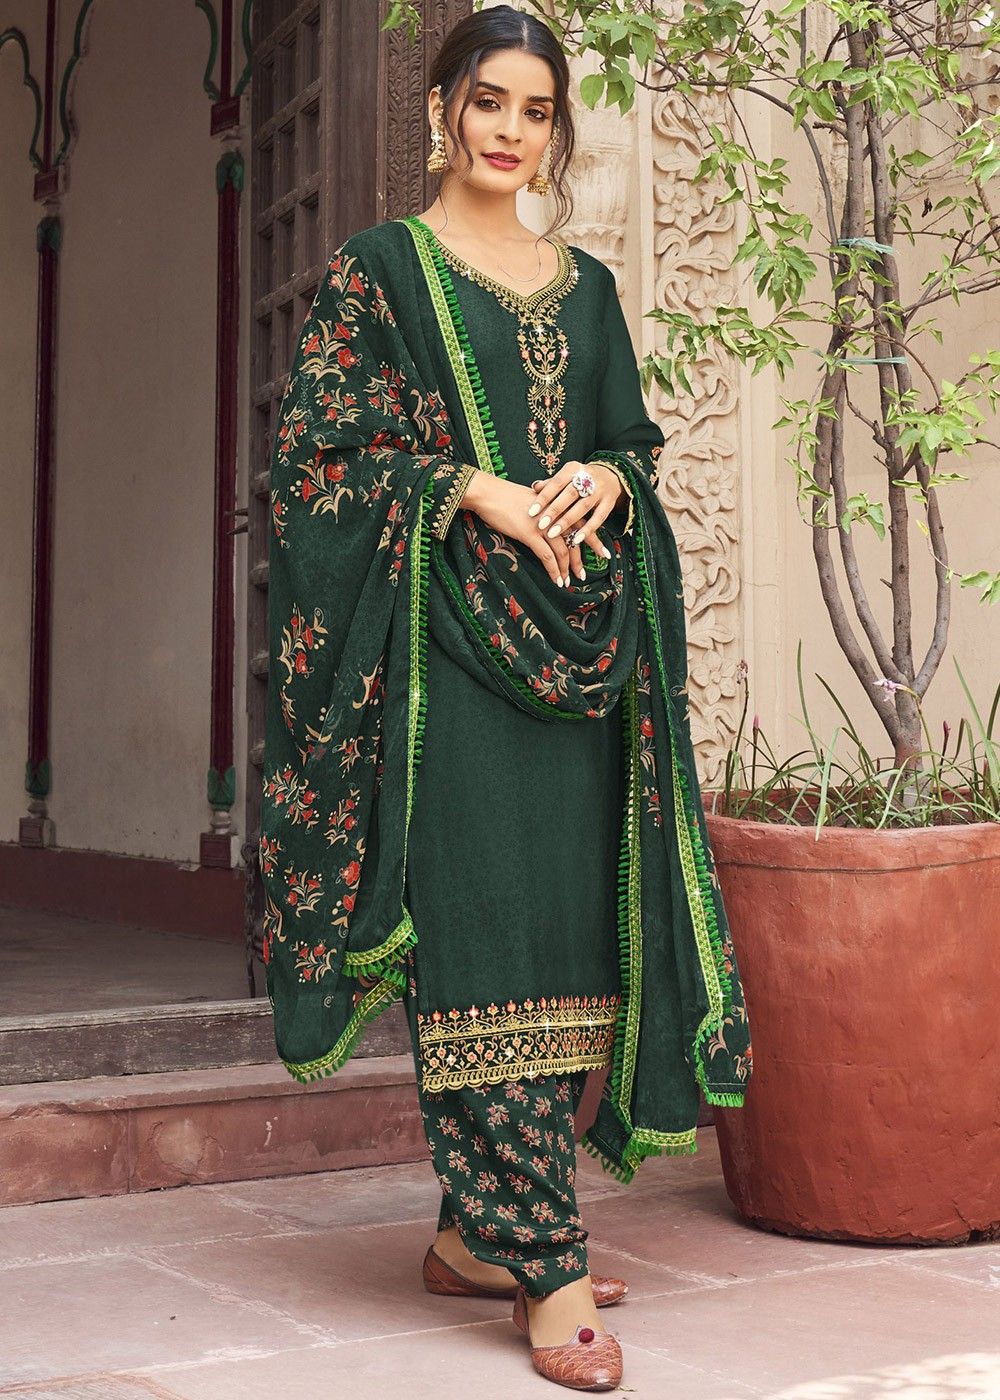 Bollywood Tadka - Punjabi - #ShehnaazGill Beautiful Punjabi Suit Look  #BiggBoss13 #PunjabiSinger #Instagram | Facebook